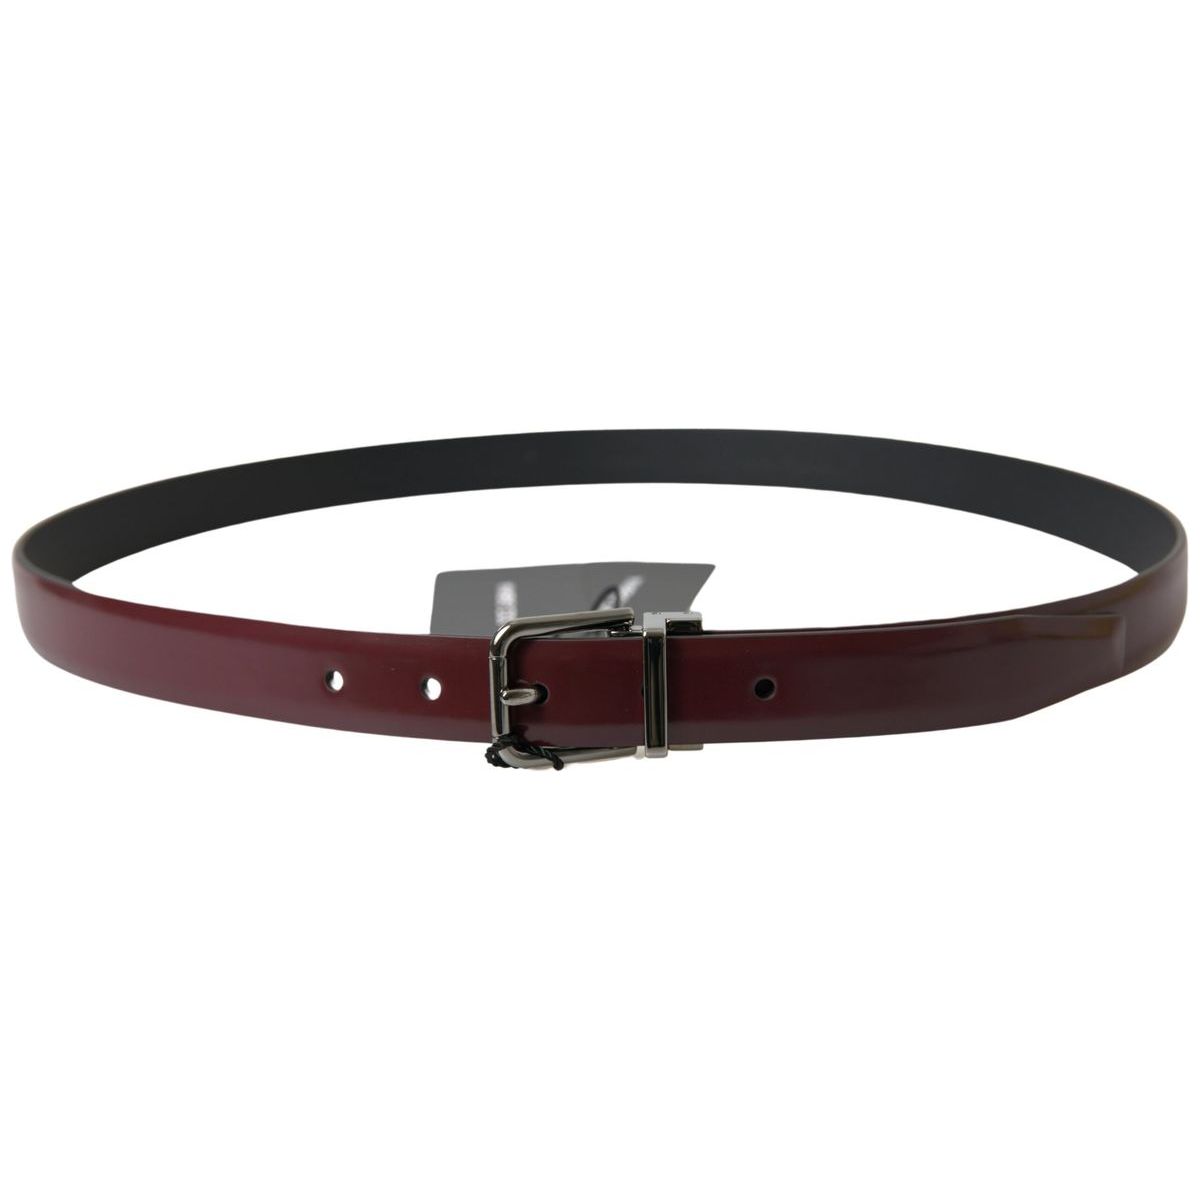 Dolce & Gabbana Elegant Bordeaux Leather Belt with Metal Buckle bordeaux-leather-silver-metal-buckle-belt